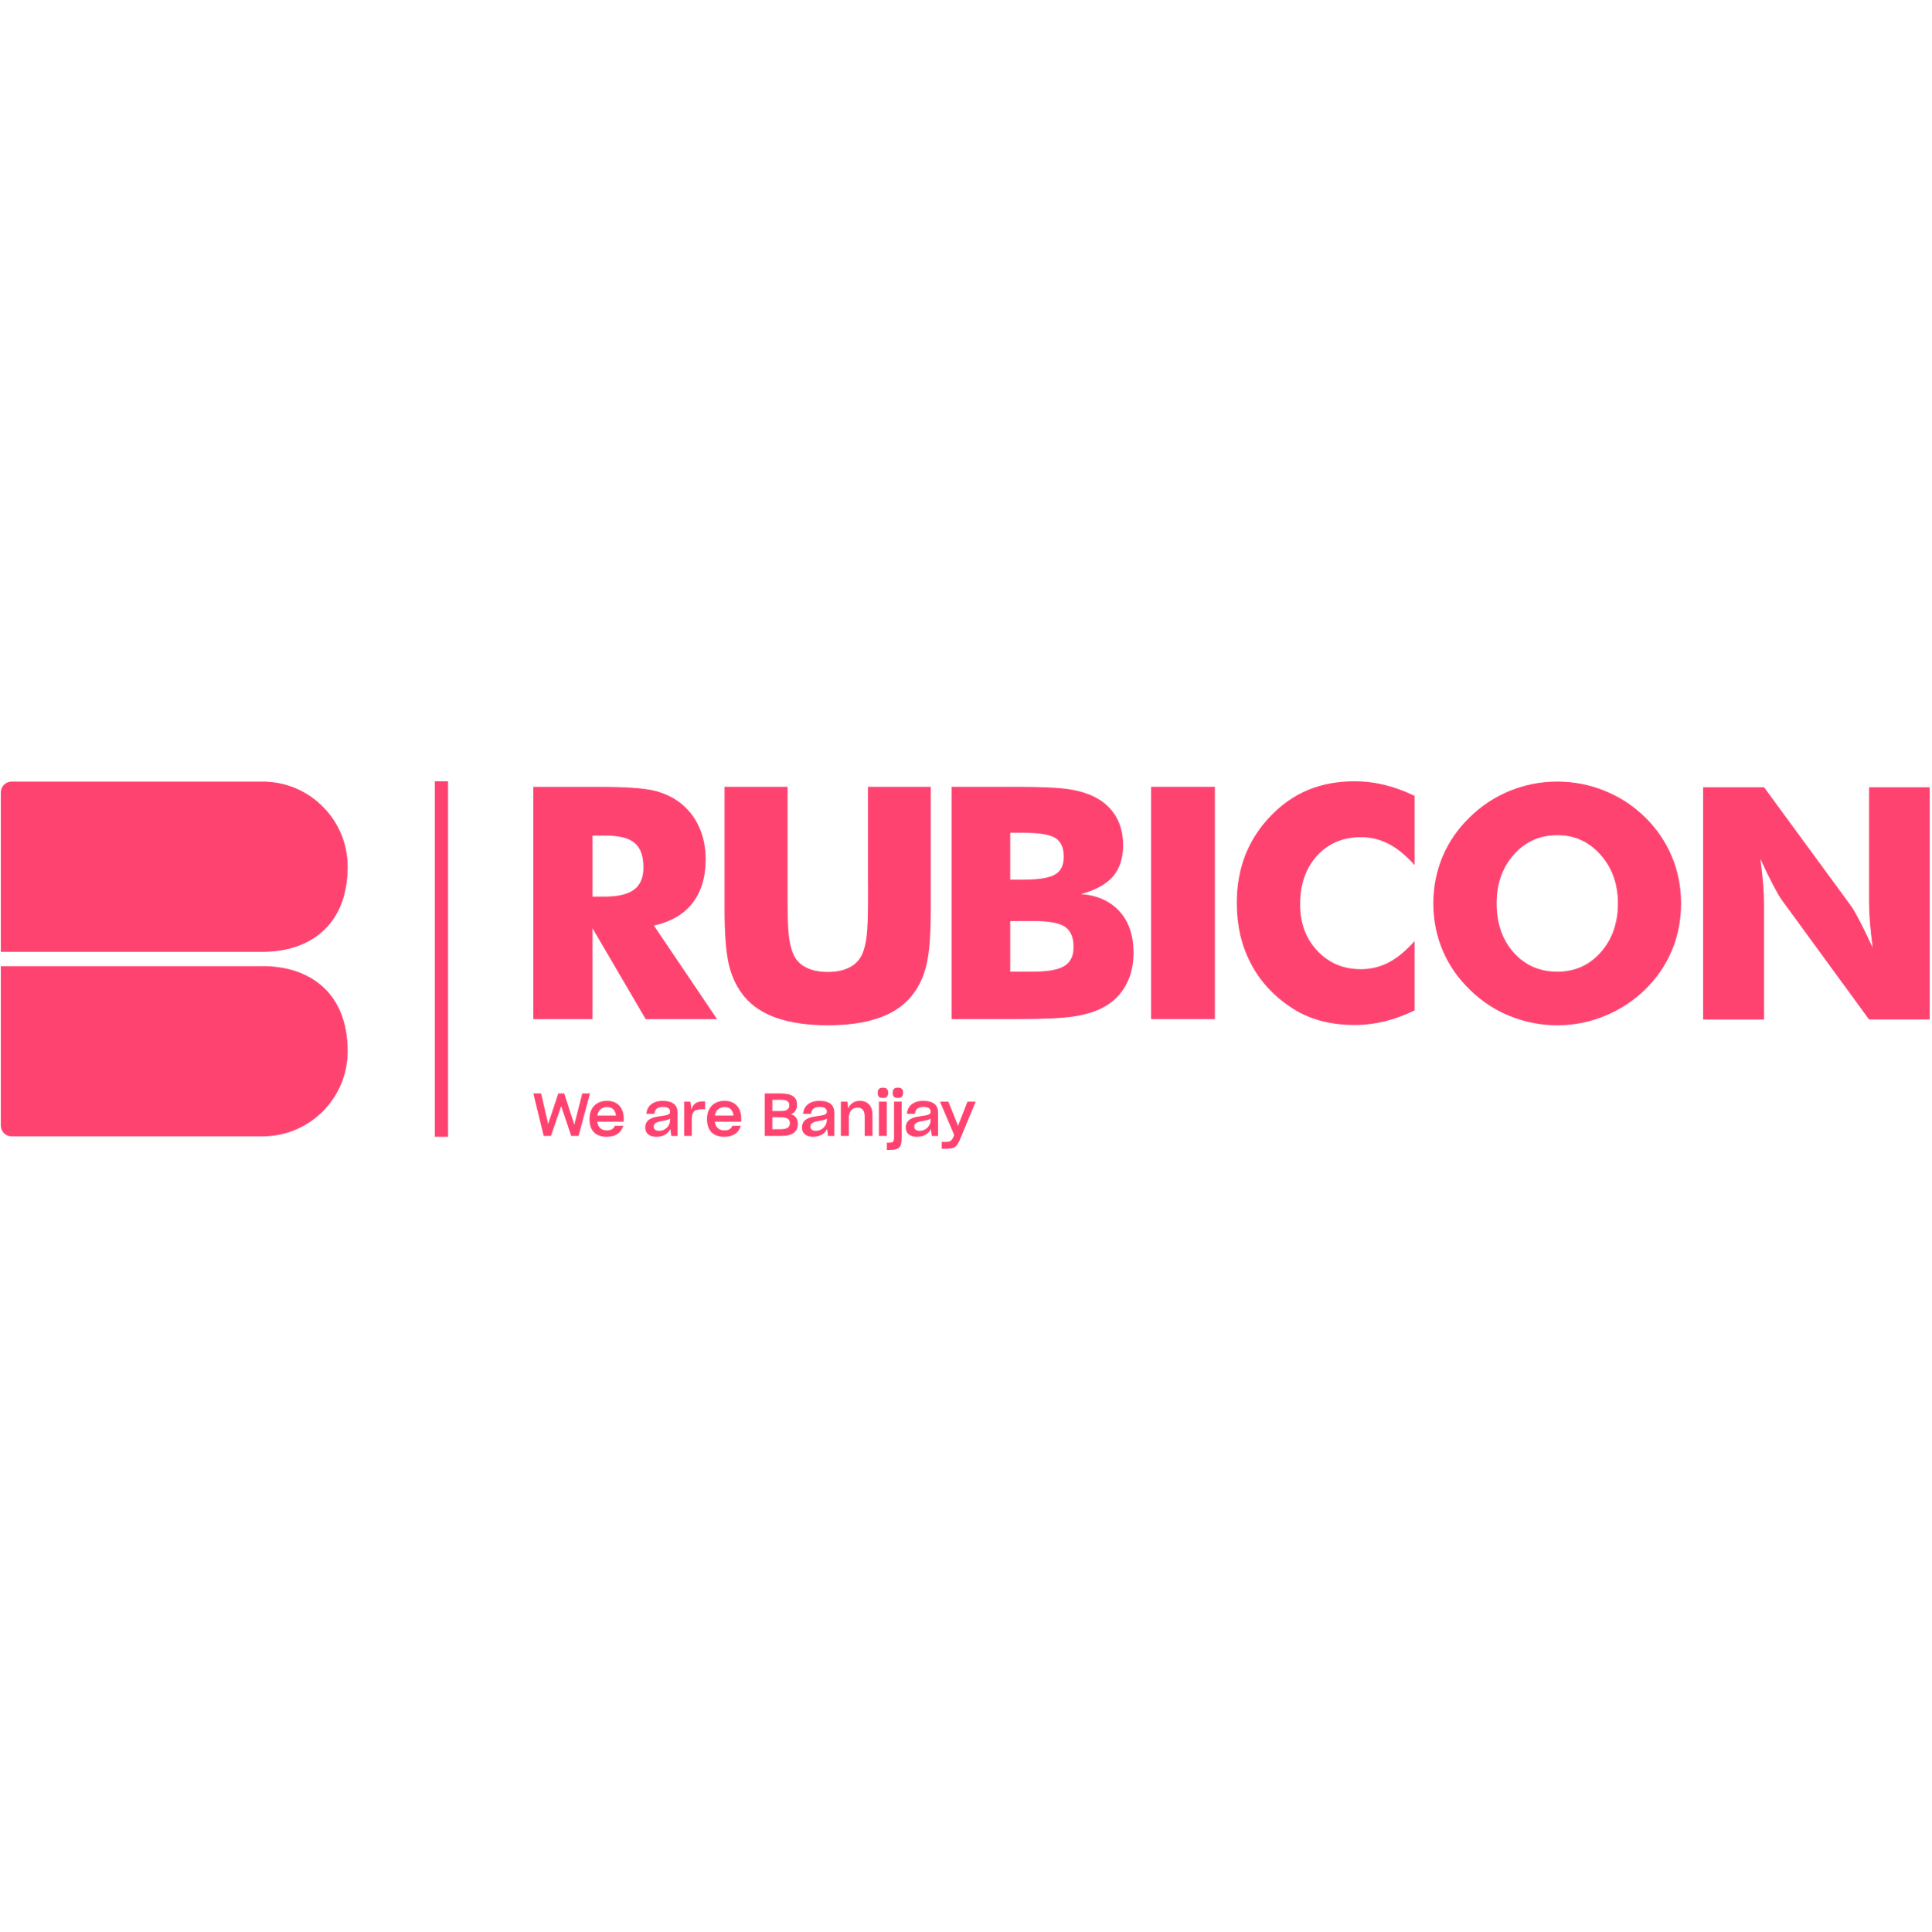 Rubicon Logo  Transparent Image